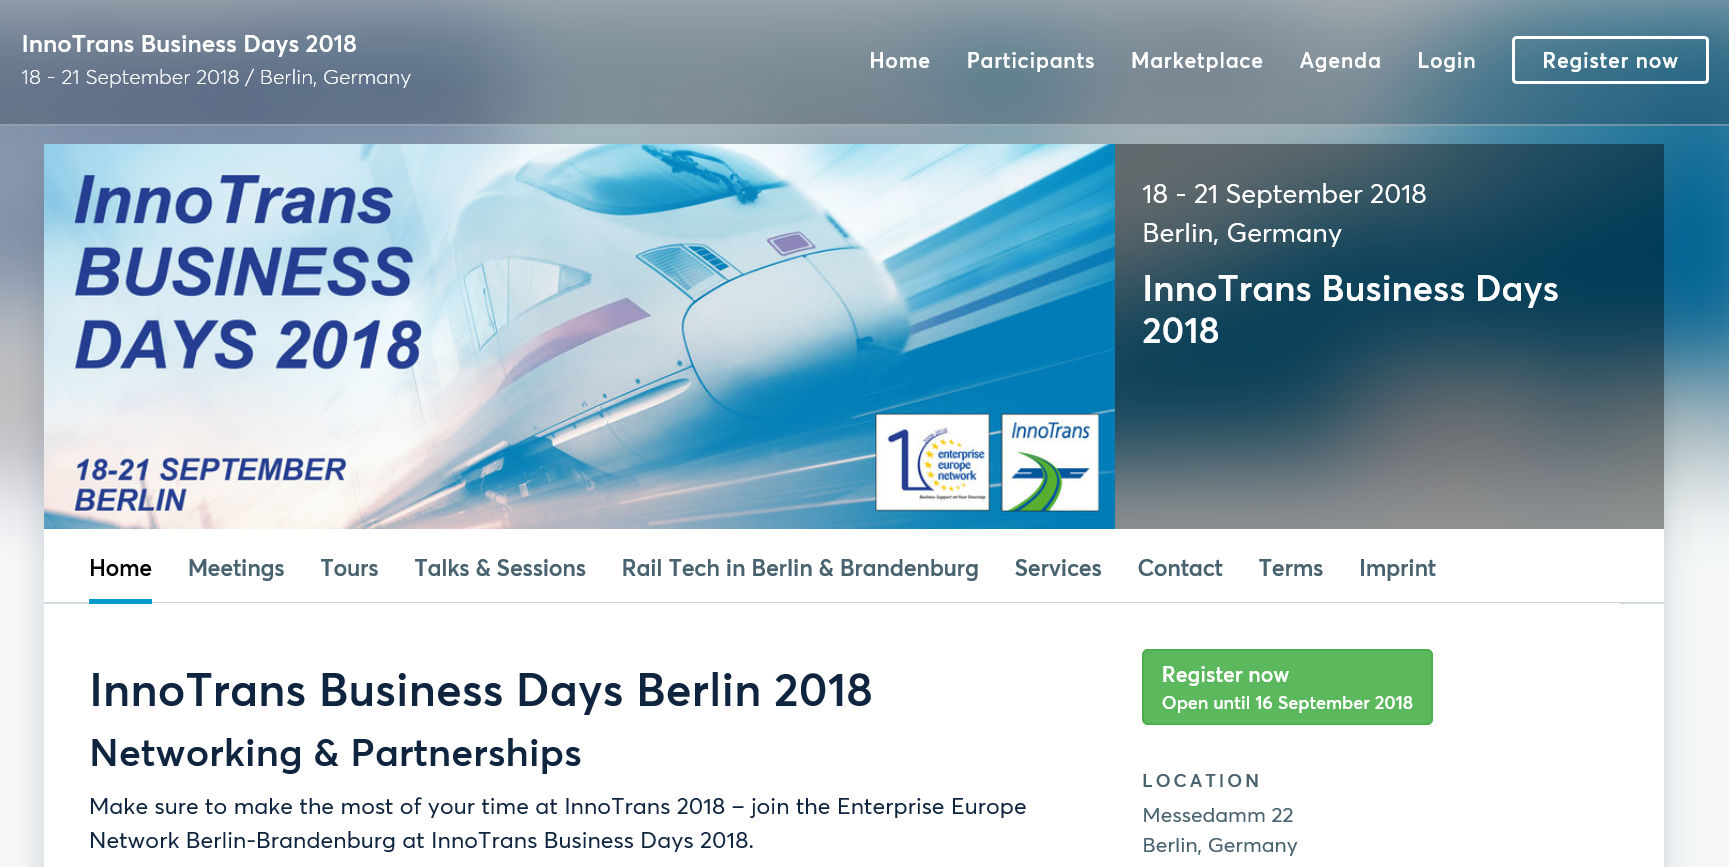 InnoTrans Business Days